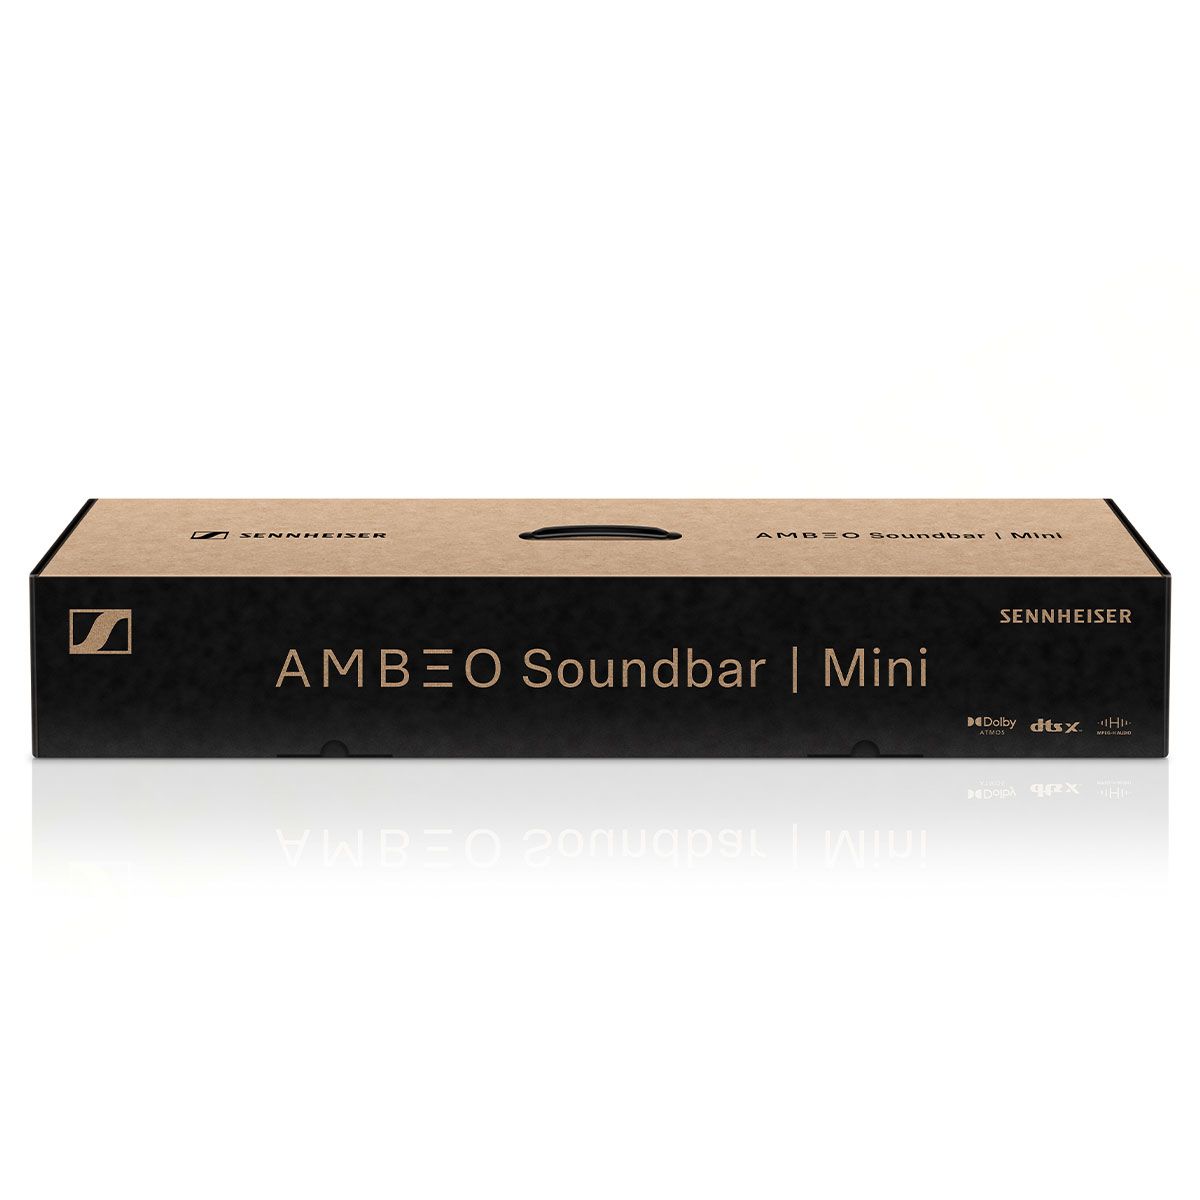 Sennheiser Ambeo Soundbar Mini packaging on white background 